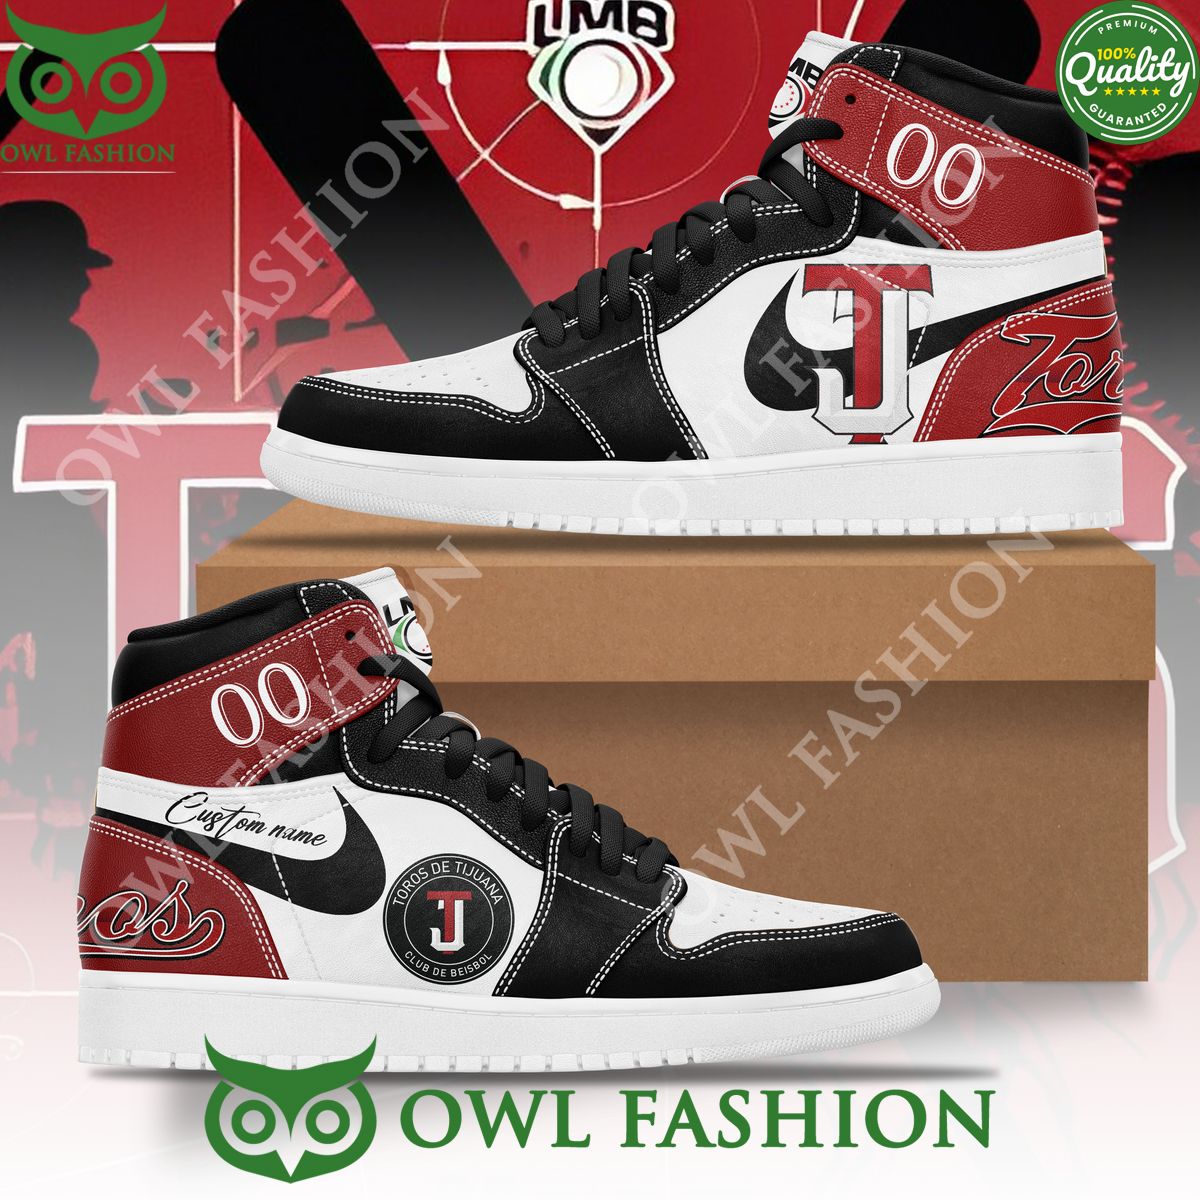 Toros de Tijuana LMB Baseball Mexican Personalized AJ1 Shoes Sneaker High Top